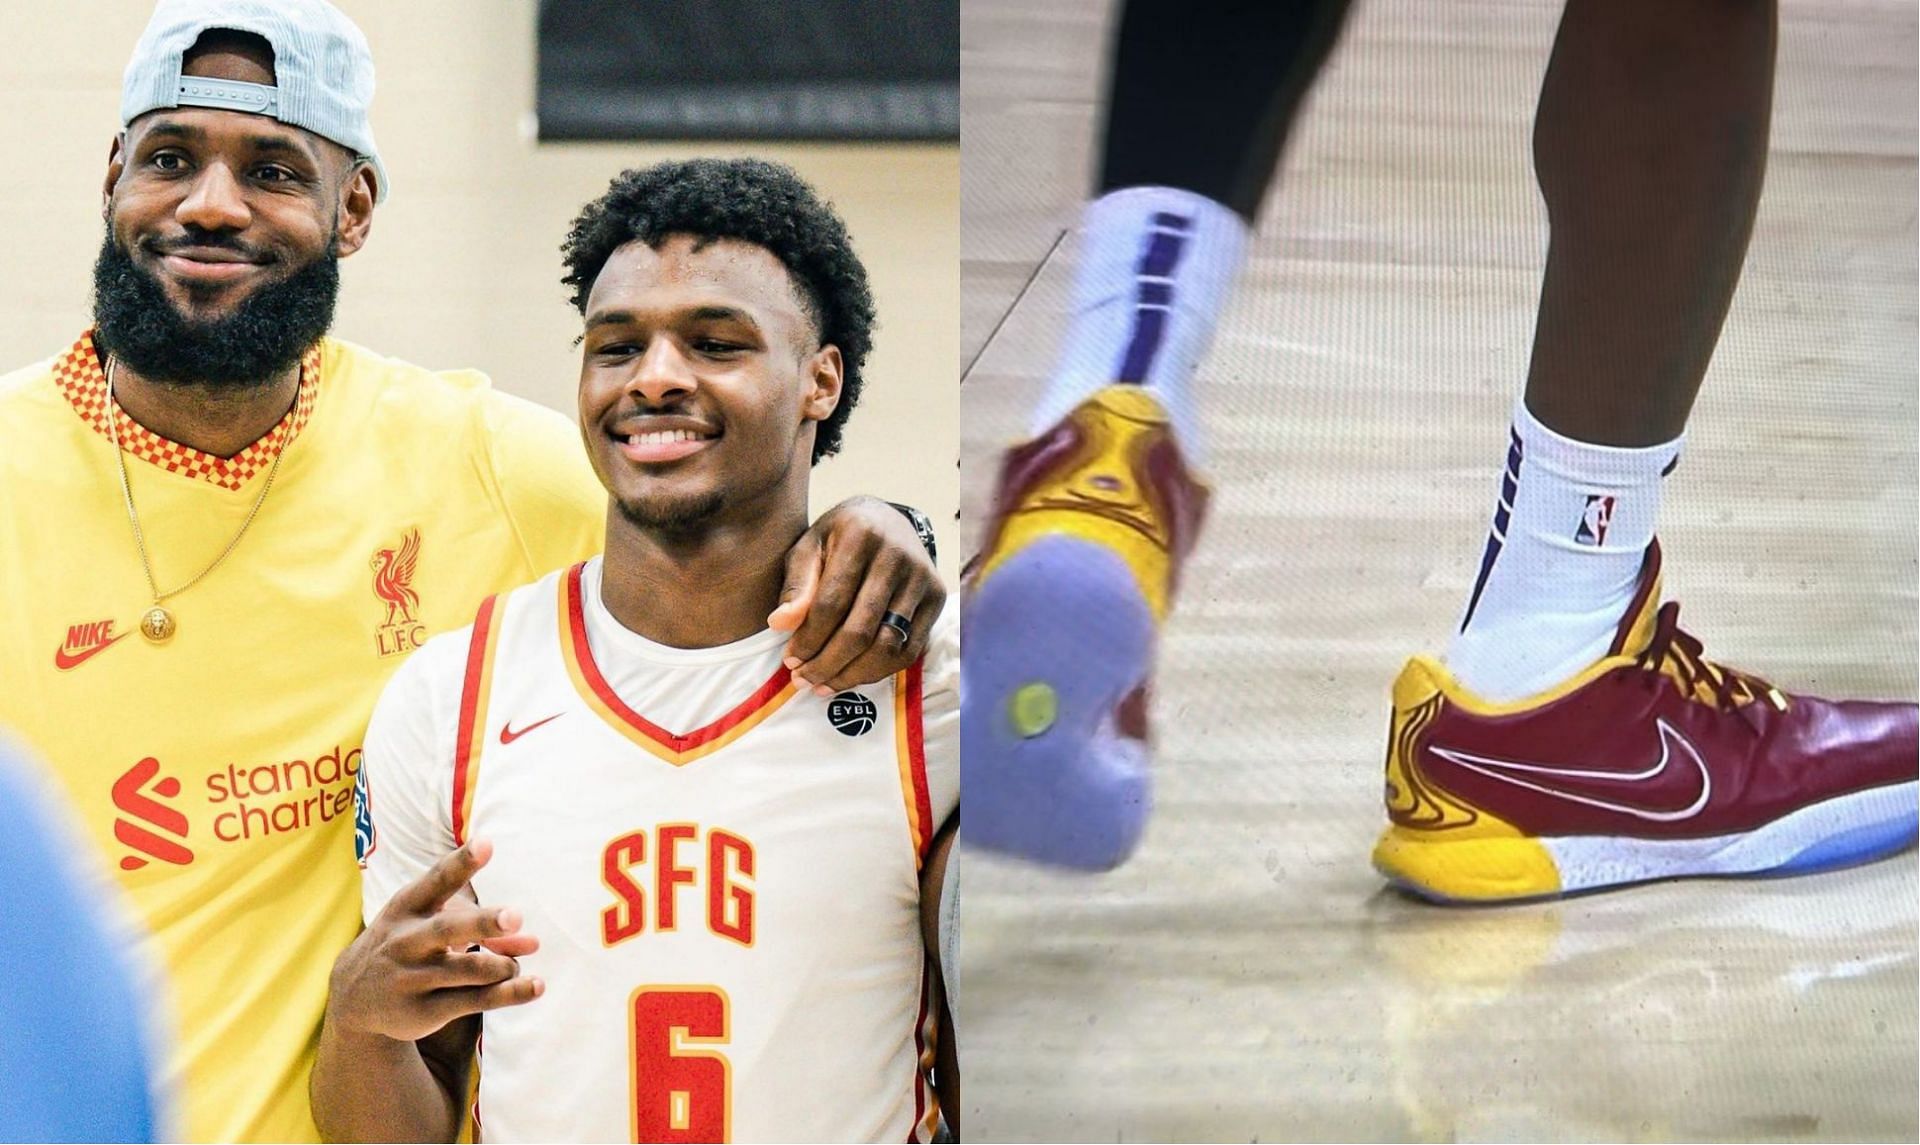 LeBron James sporting new &quot;USC&quot; shoes